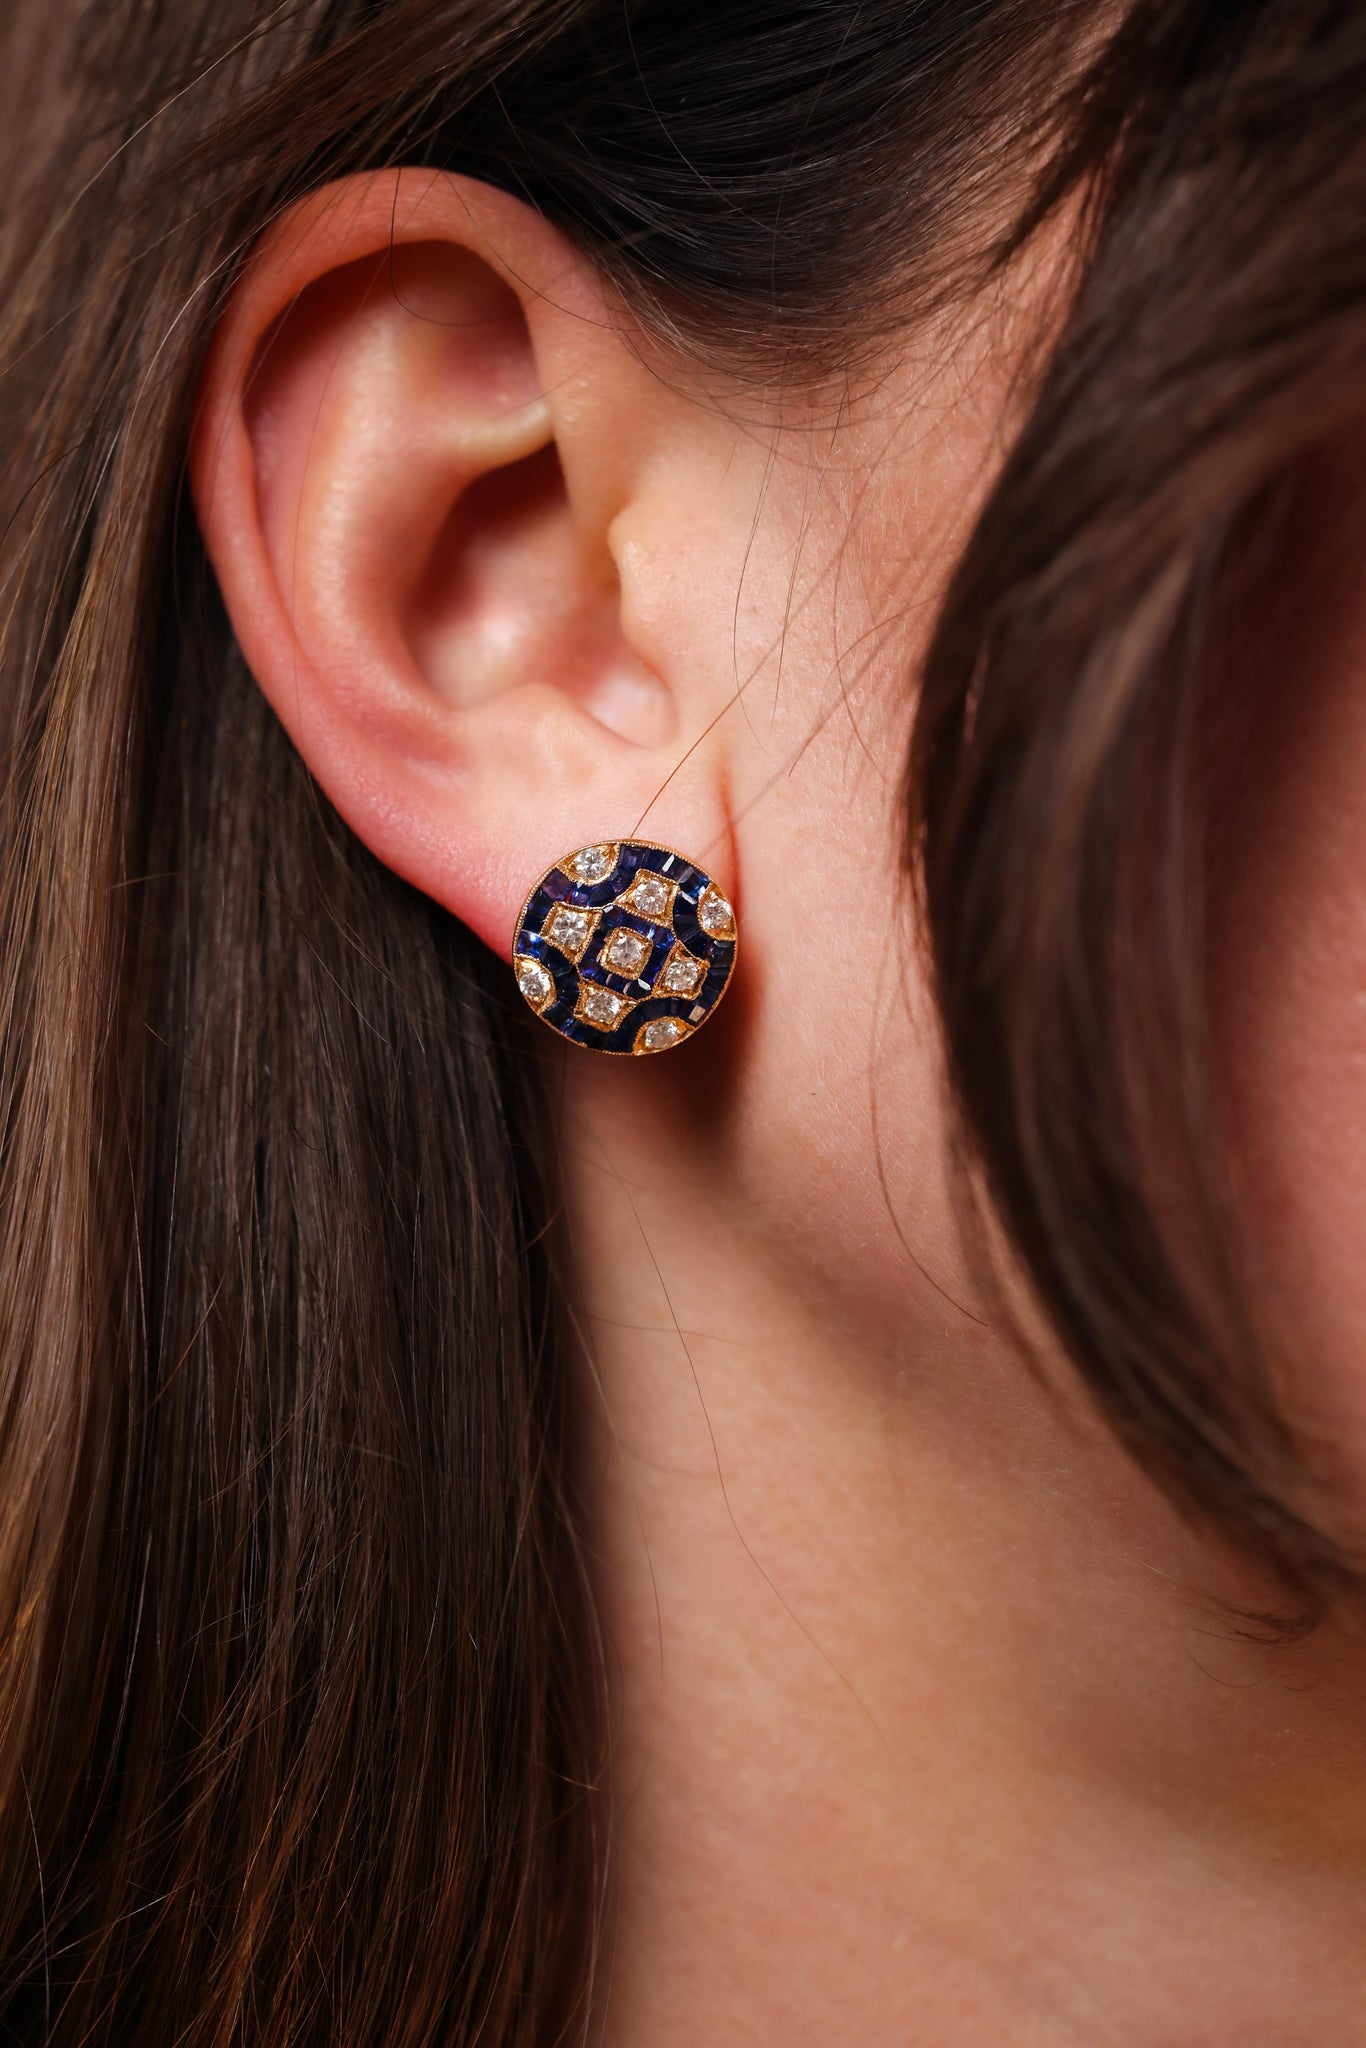 Mid-Century Diamond Sapphire Gold Earrings